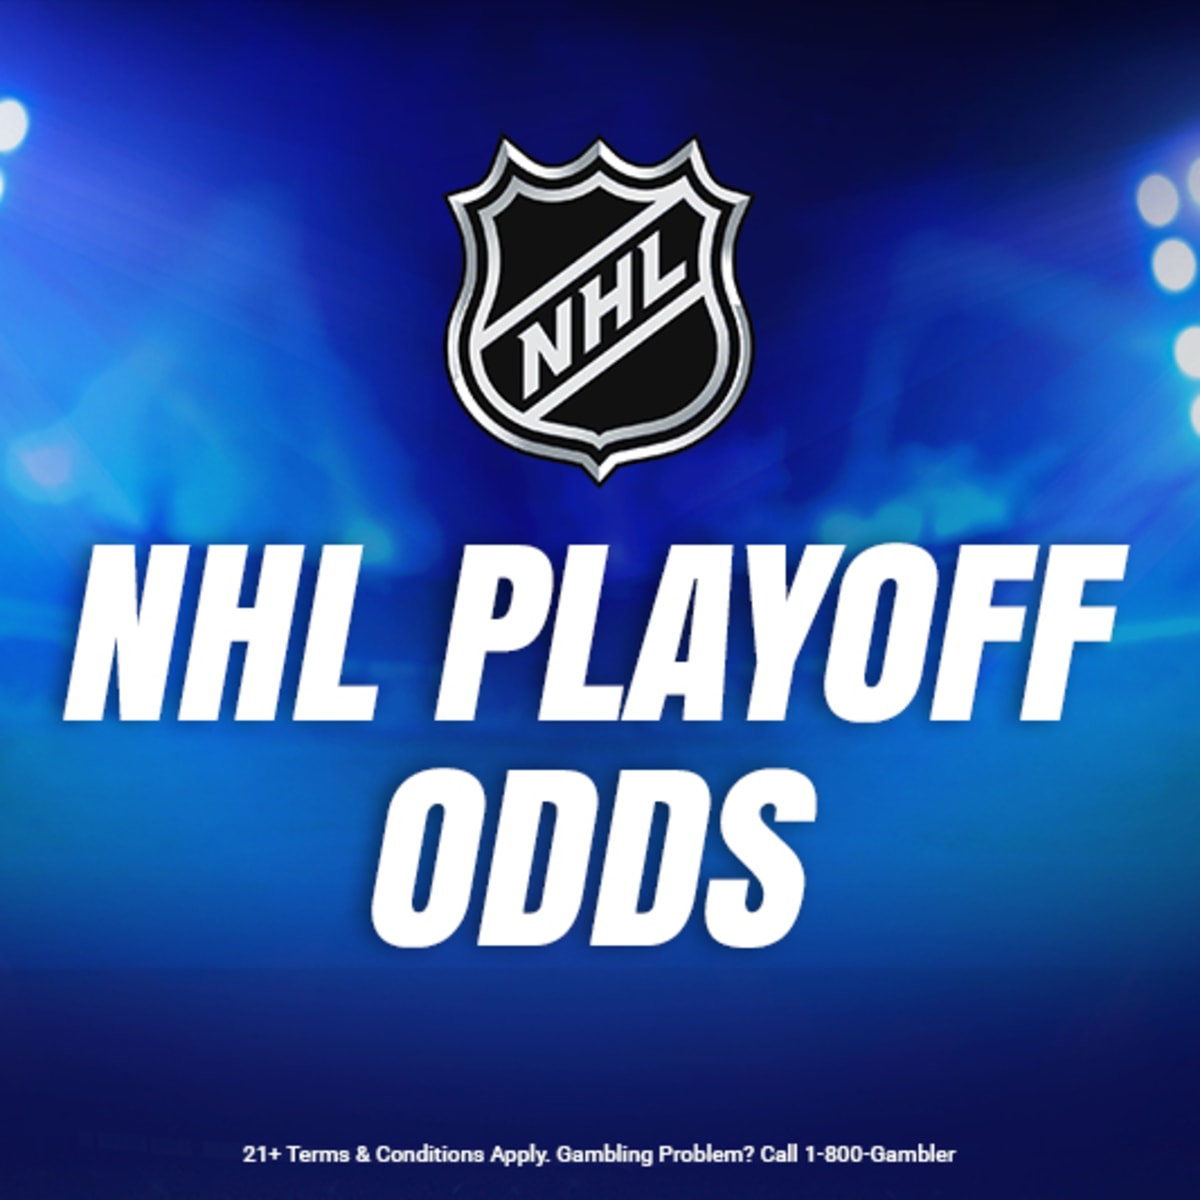 New Jersey Devils Vs. Boston Bruins Odds, Picks, and Predictions (3/31/22)